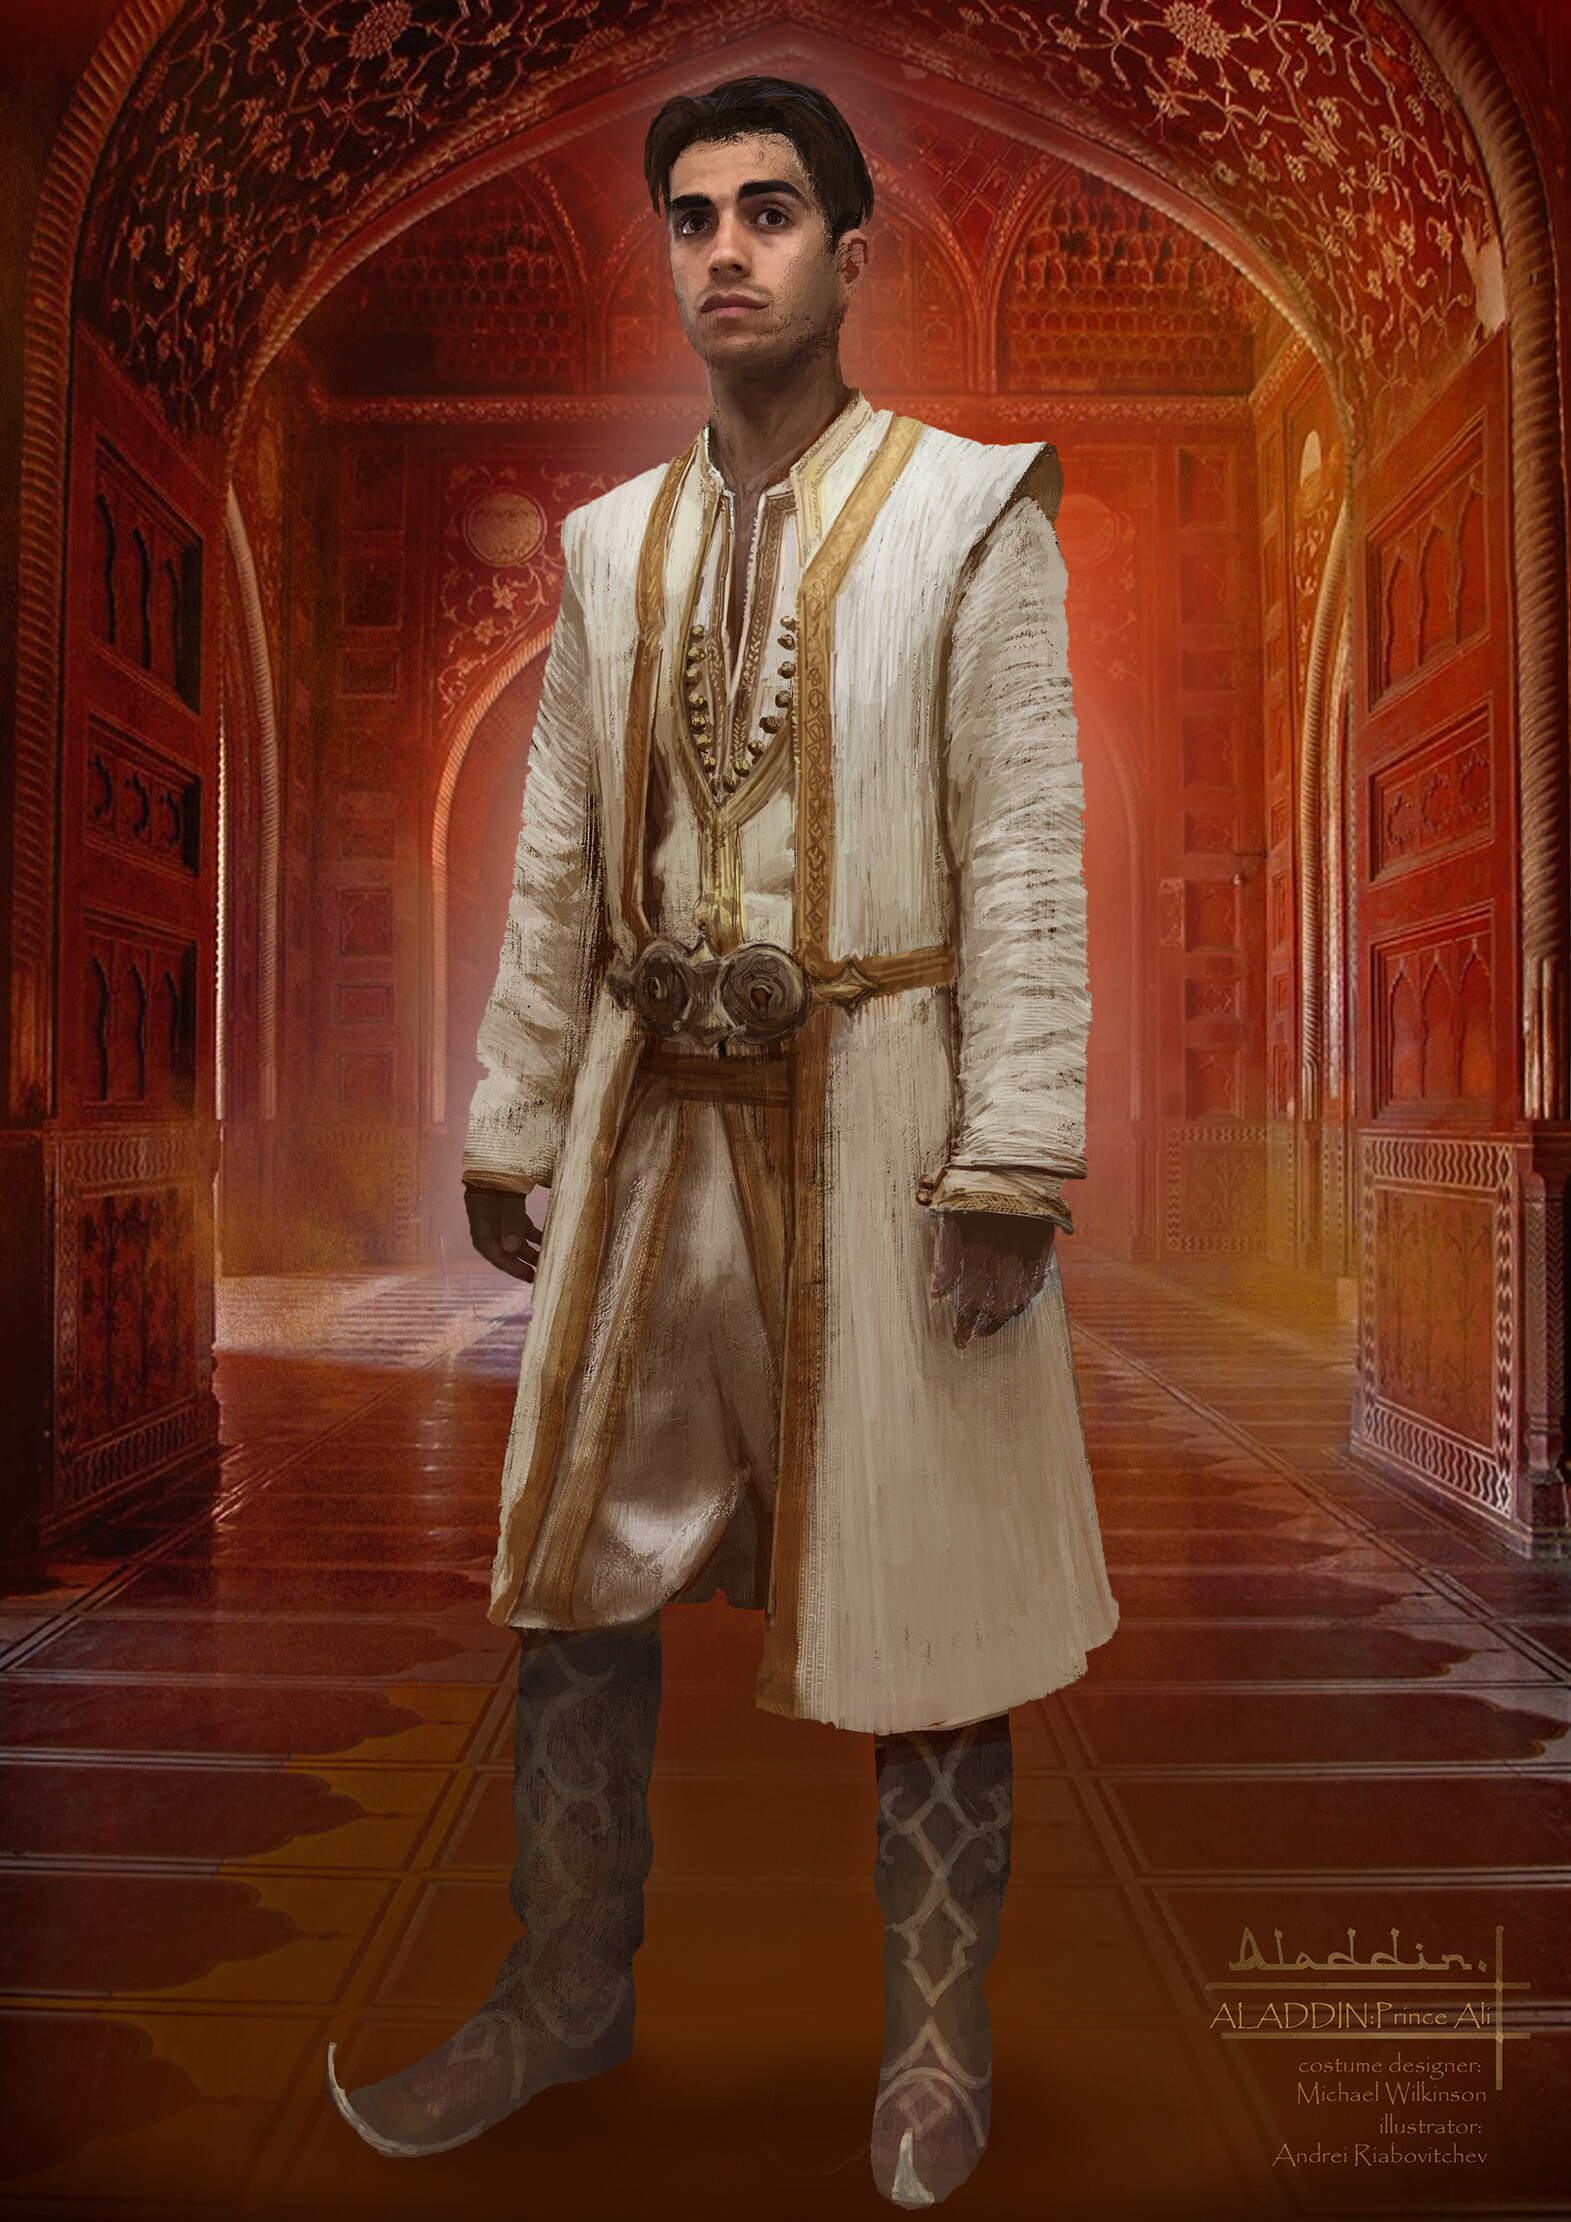 TeamAladdin - Aladdin [Disney - 2019] - Page 43 Andrei-riabovitchev-01-aladdin-prince-ali-coat-v101-101-ar